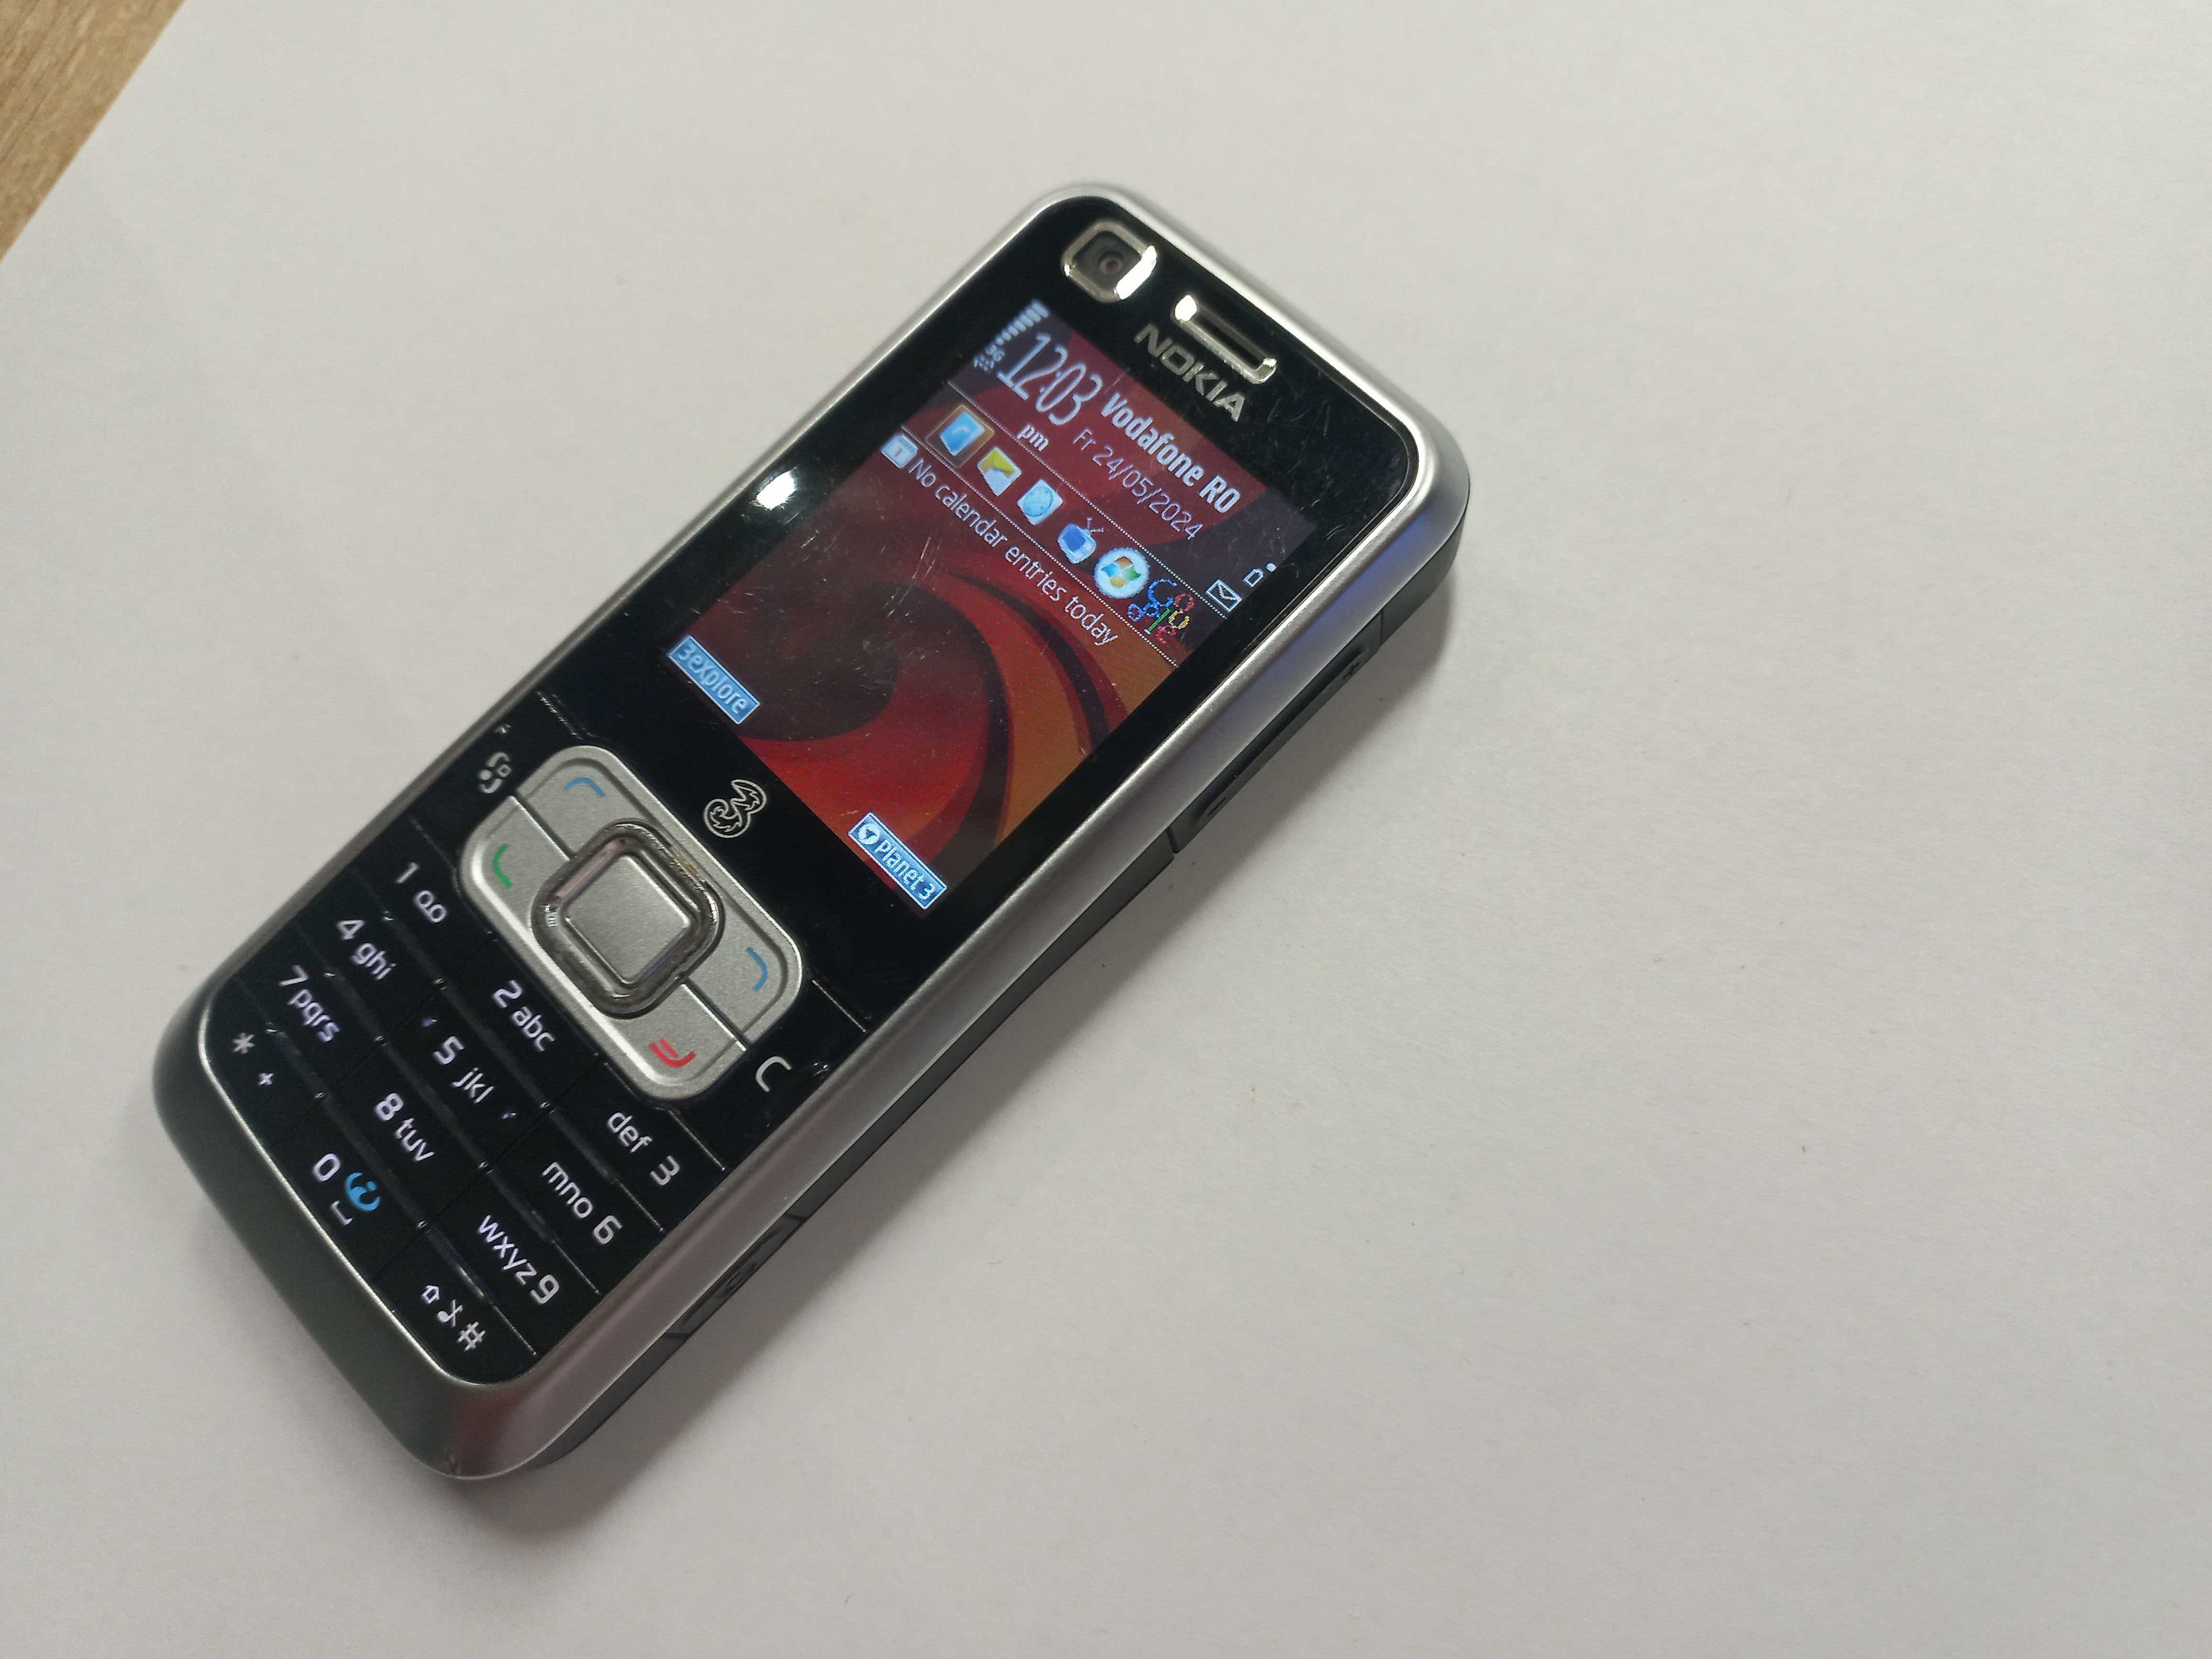 Telefon mobil Nokia 6120 Classic Black 6120c-1 - Incarcator - decodat